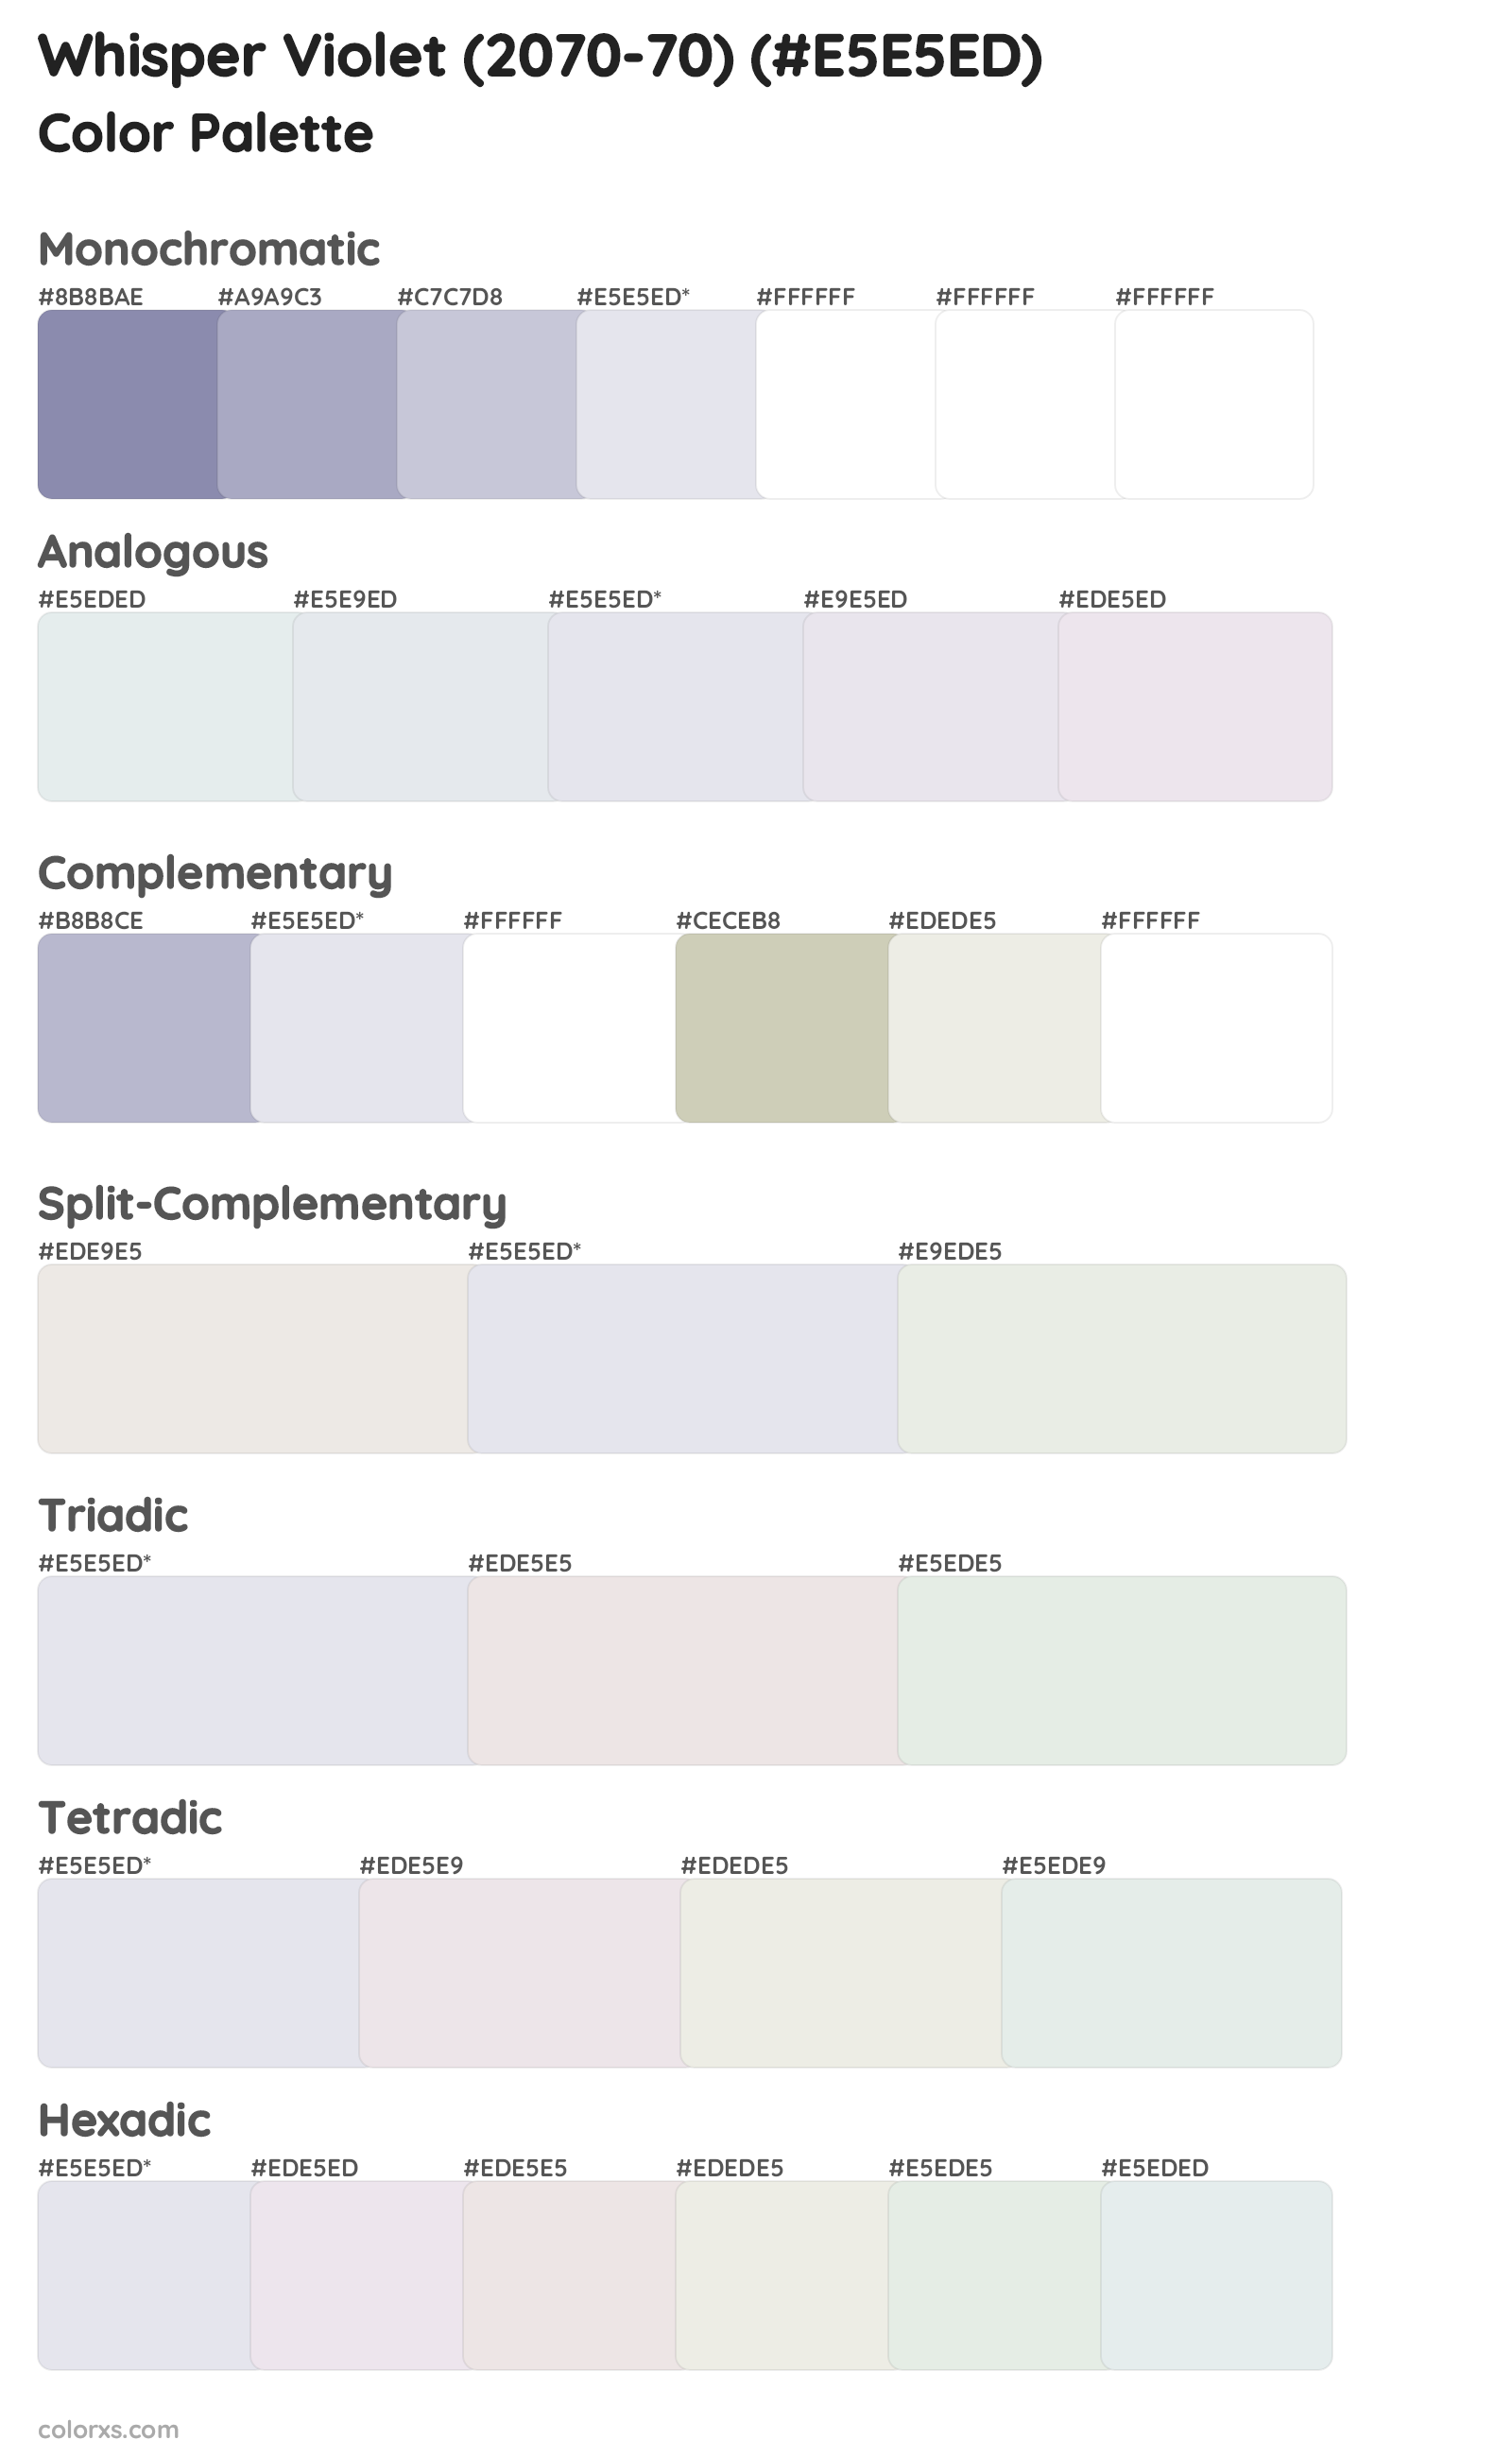 Whisper Violet (2070-70) Color Scheme Palettes